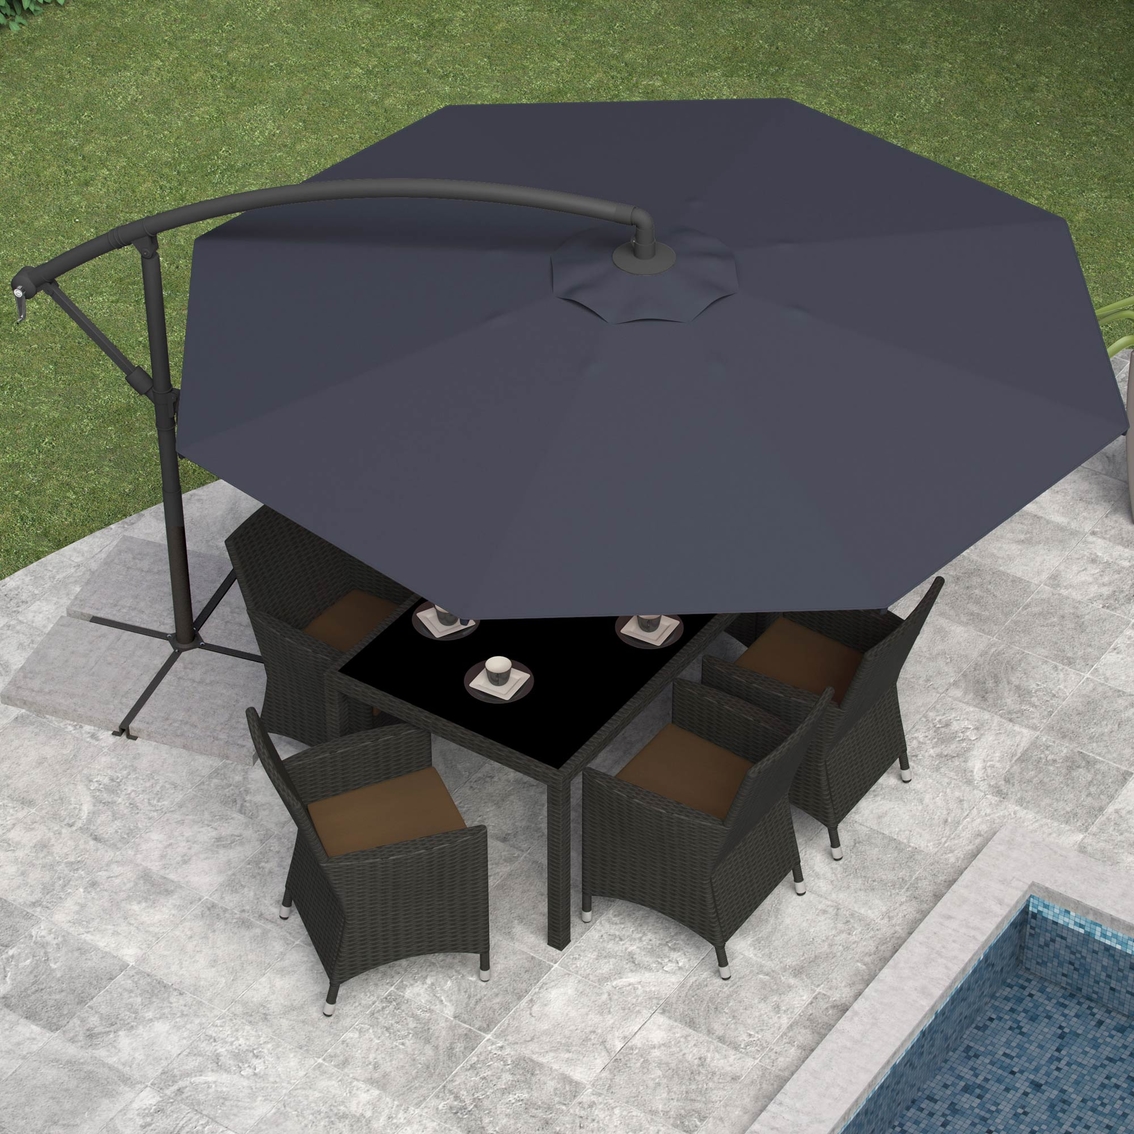 CorLiving Offset Patio Umbrella - Image 2 of 2